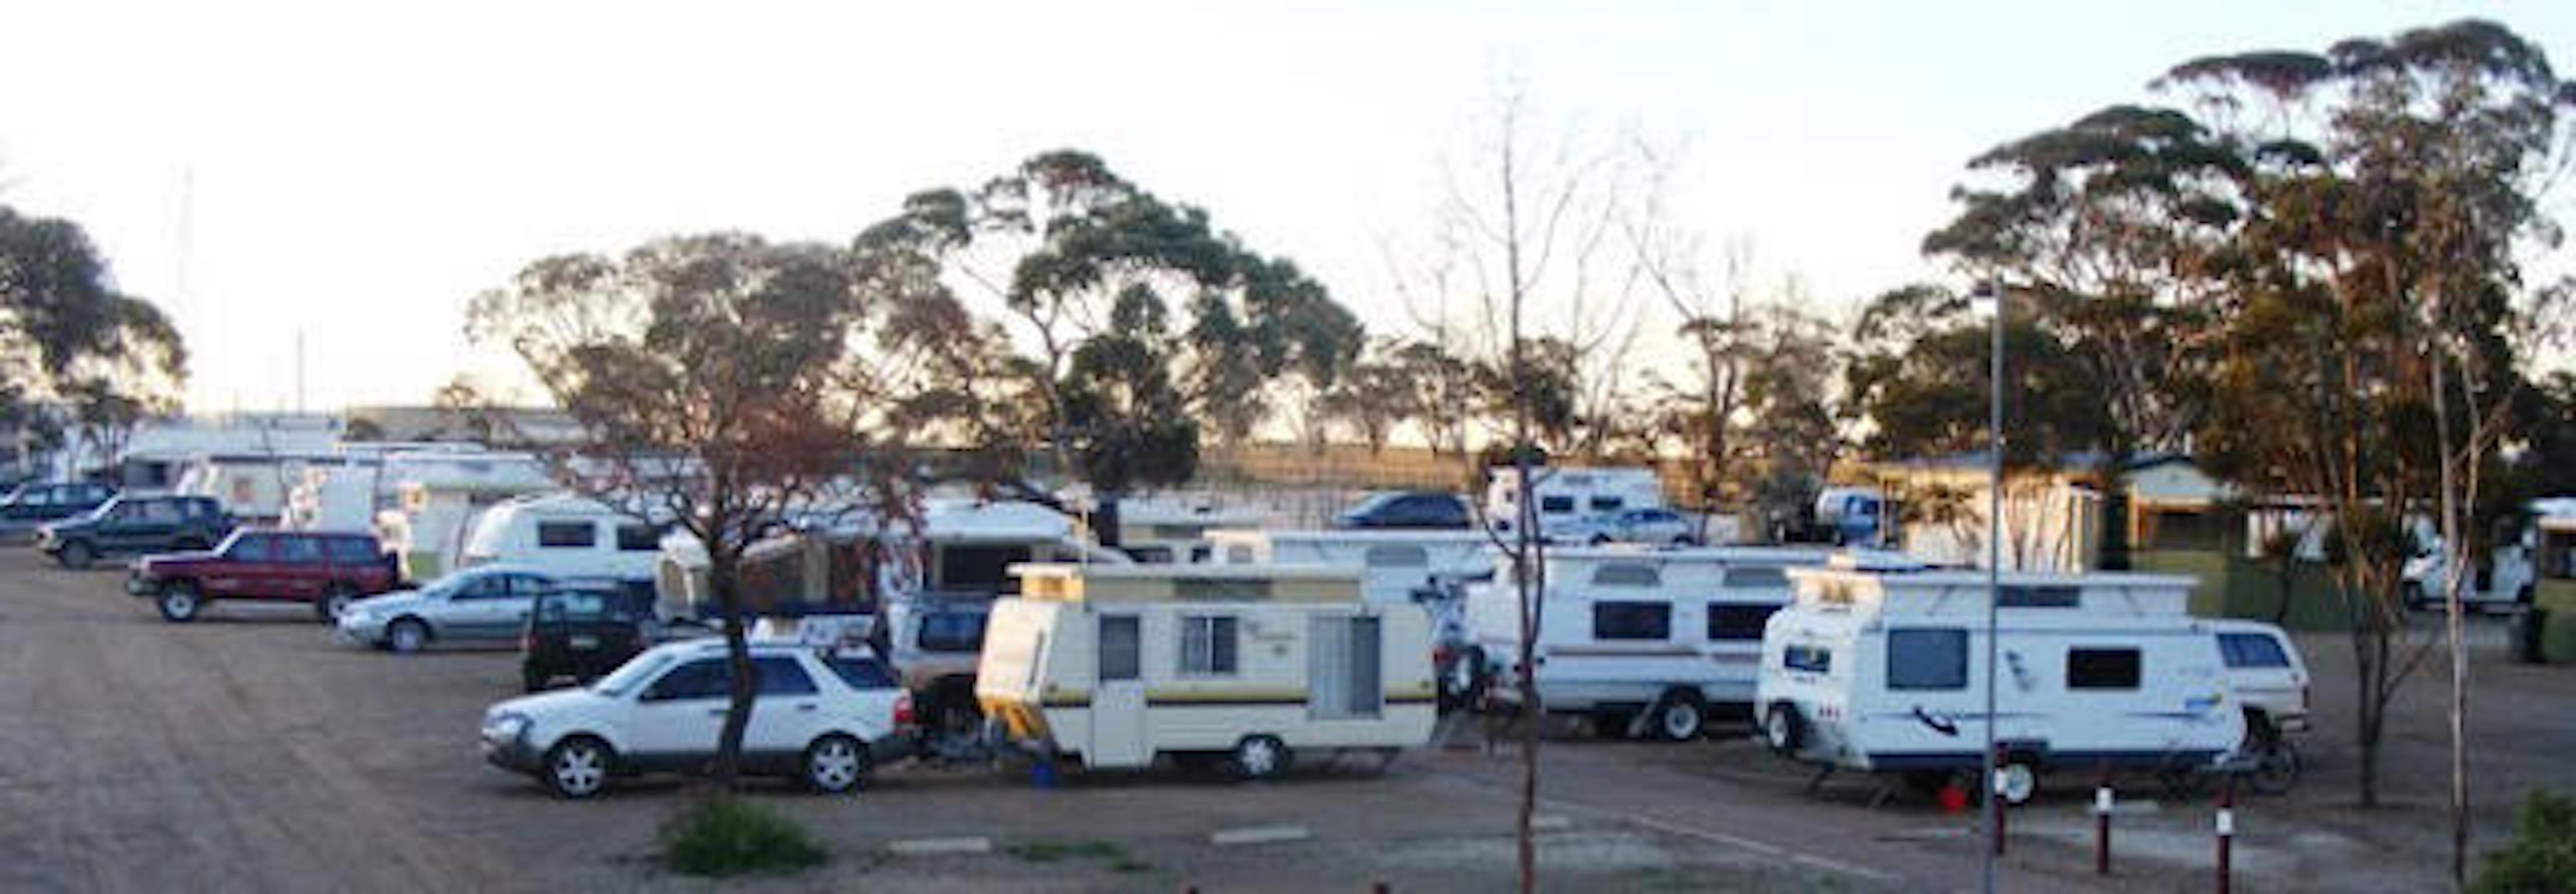 Woomera Traveller's Village and Caravan Park - Accommodation Resorts